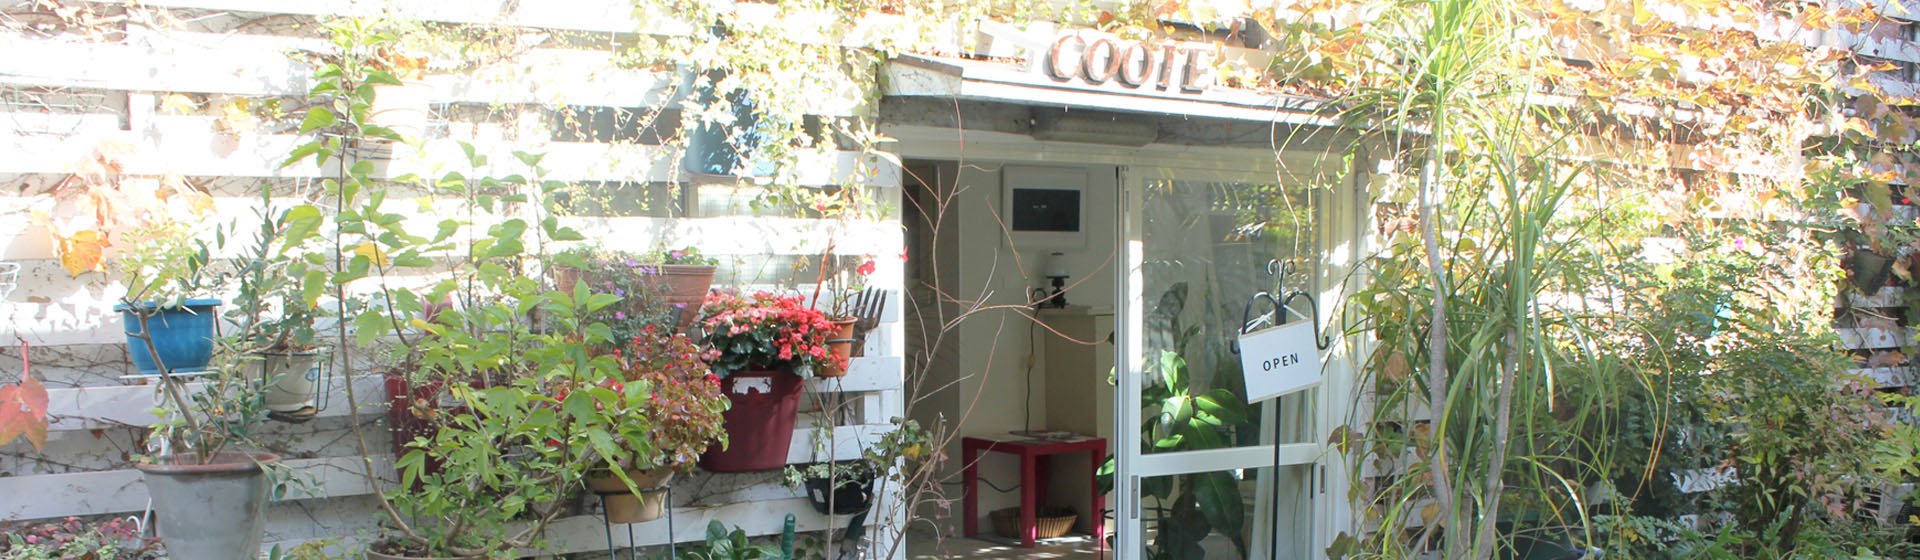 studio coote cafe スタジオクート カフェ